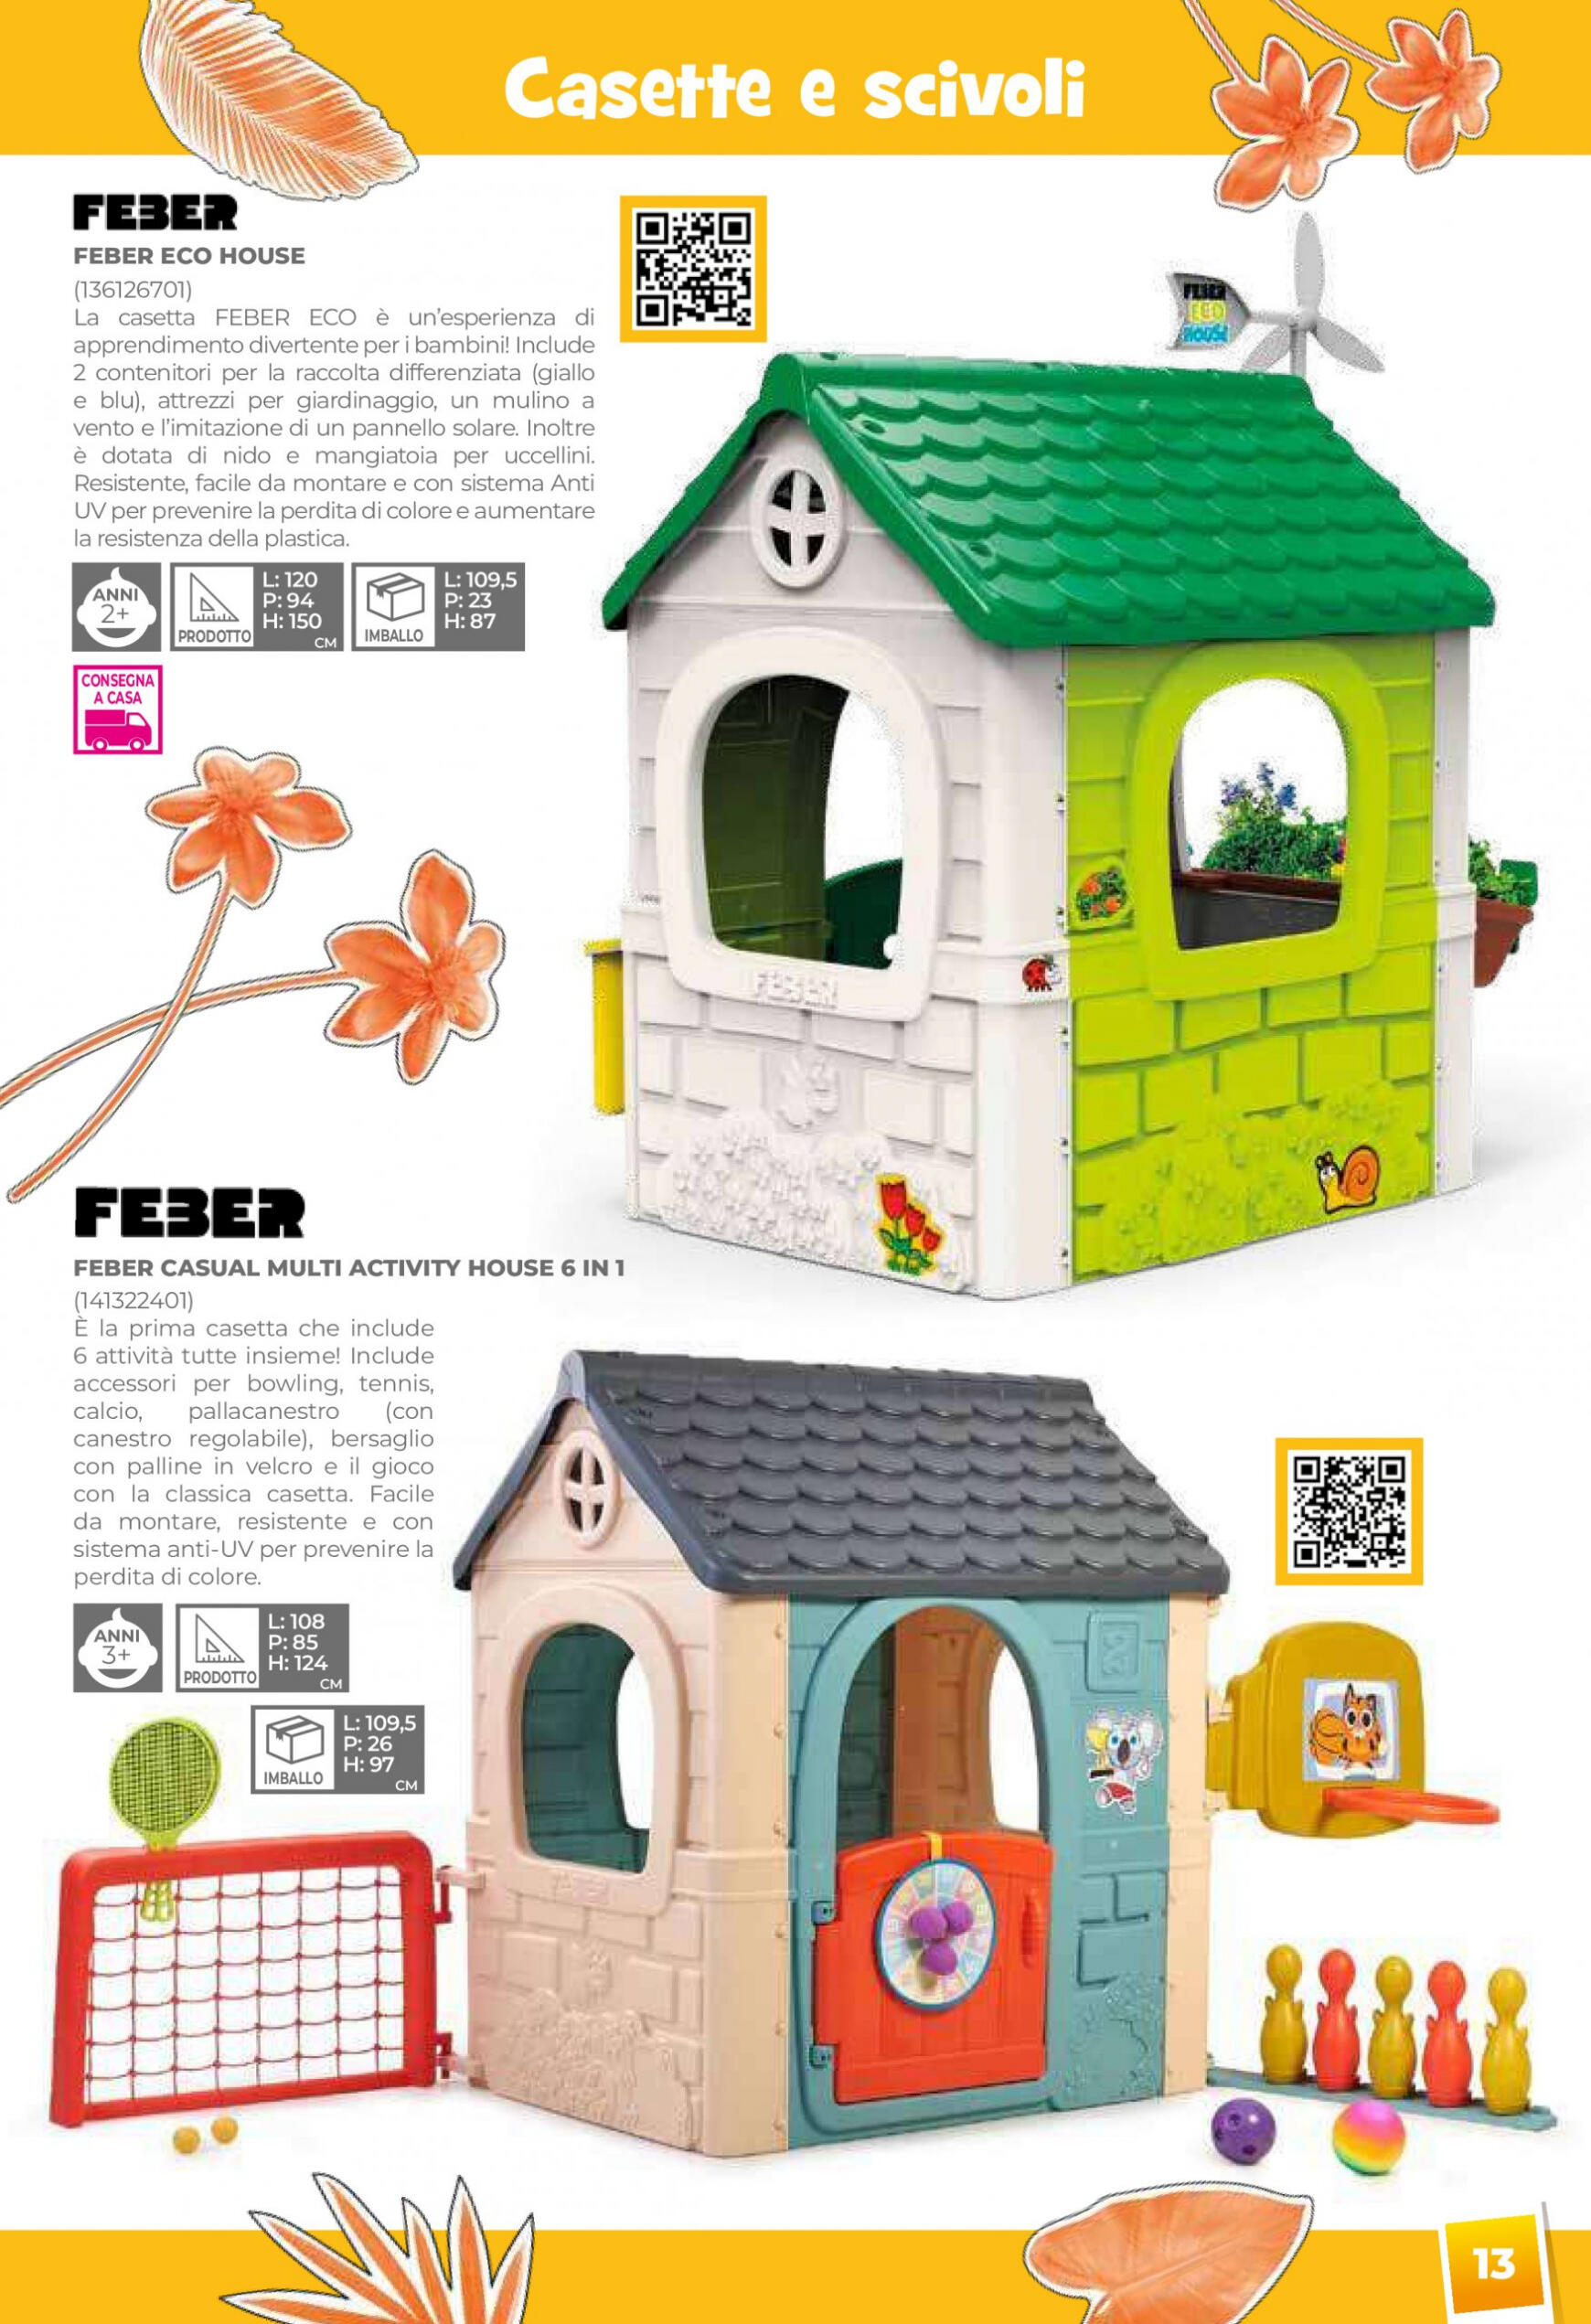 toys-center - Nuovo volantino Toys Center 01.05. - 31.12. - page: 15